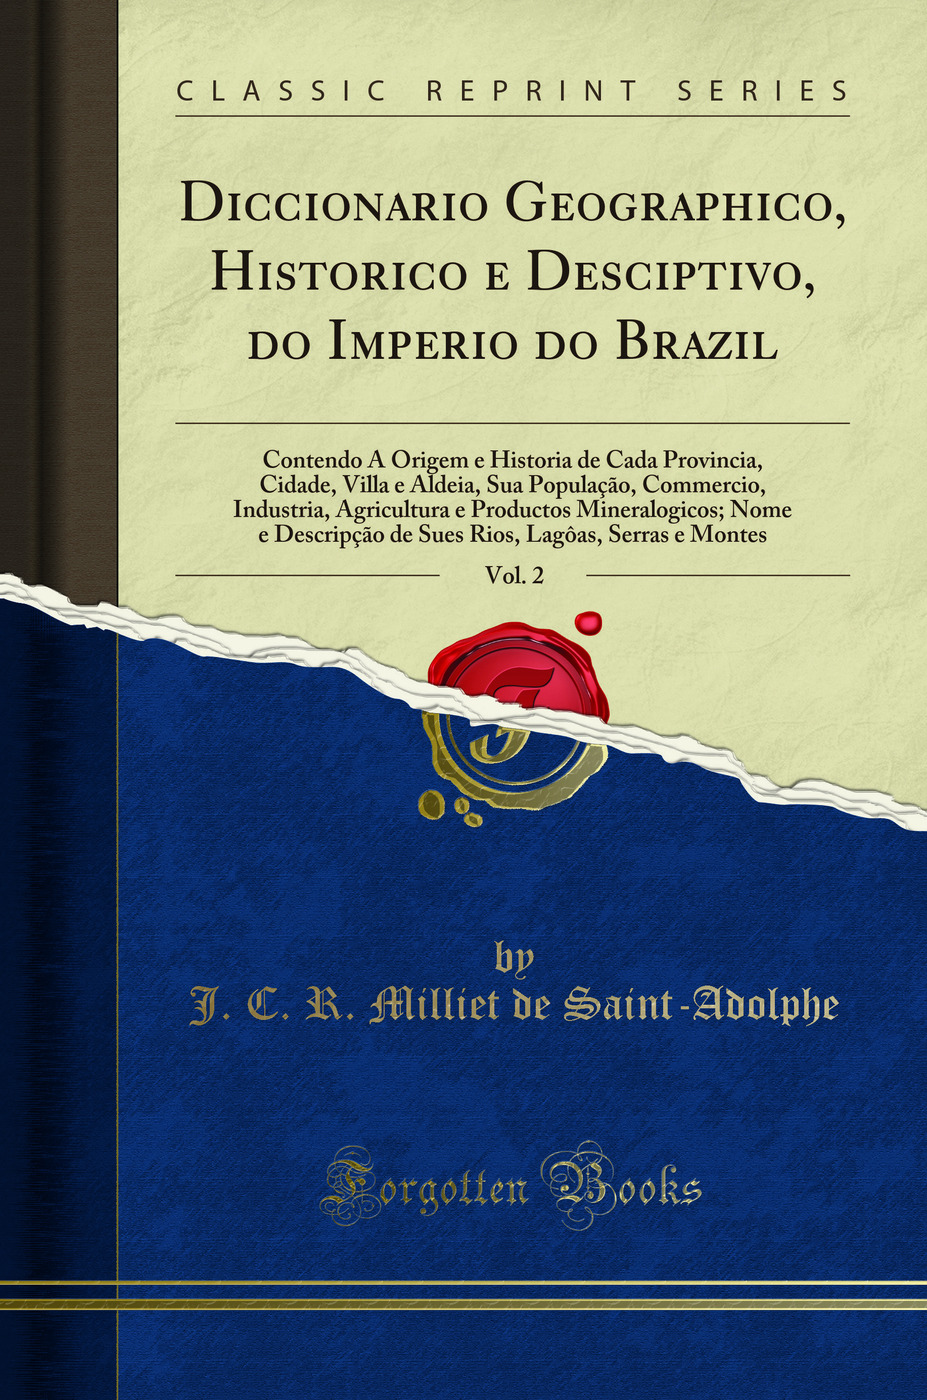 Diccionario Geographico, Historico e Desciptivo, do Imperio do Brazil, Vol. 2 - J. C. R. Milliet de Saint-Adolphe